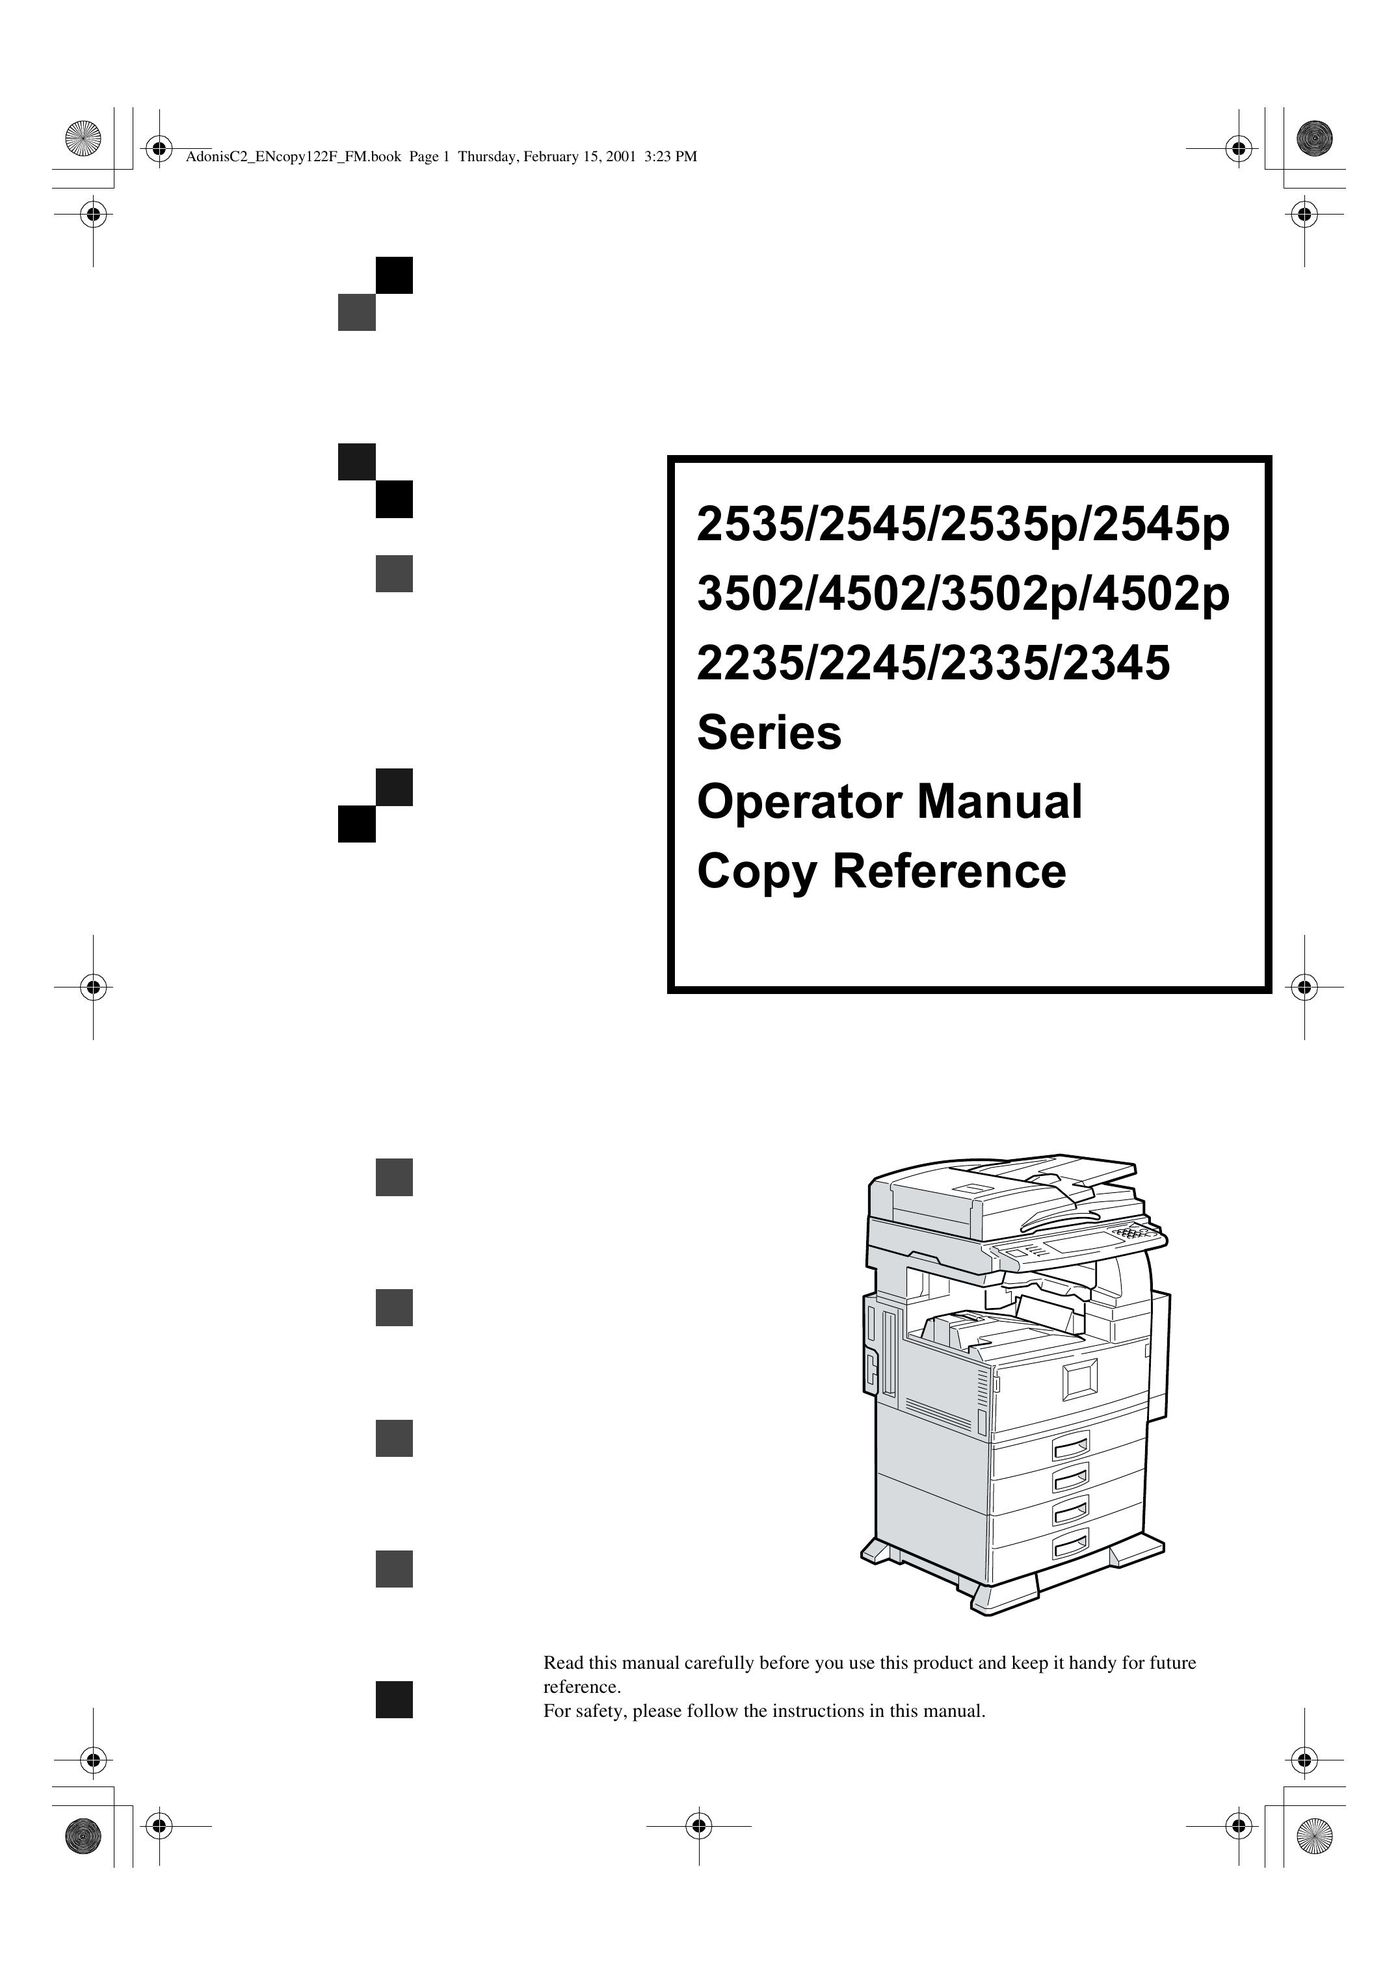 Savin 2535/2535p All in One Printer User Manual